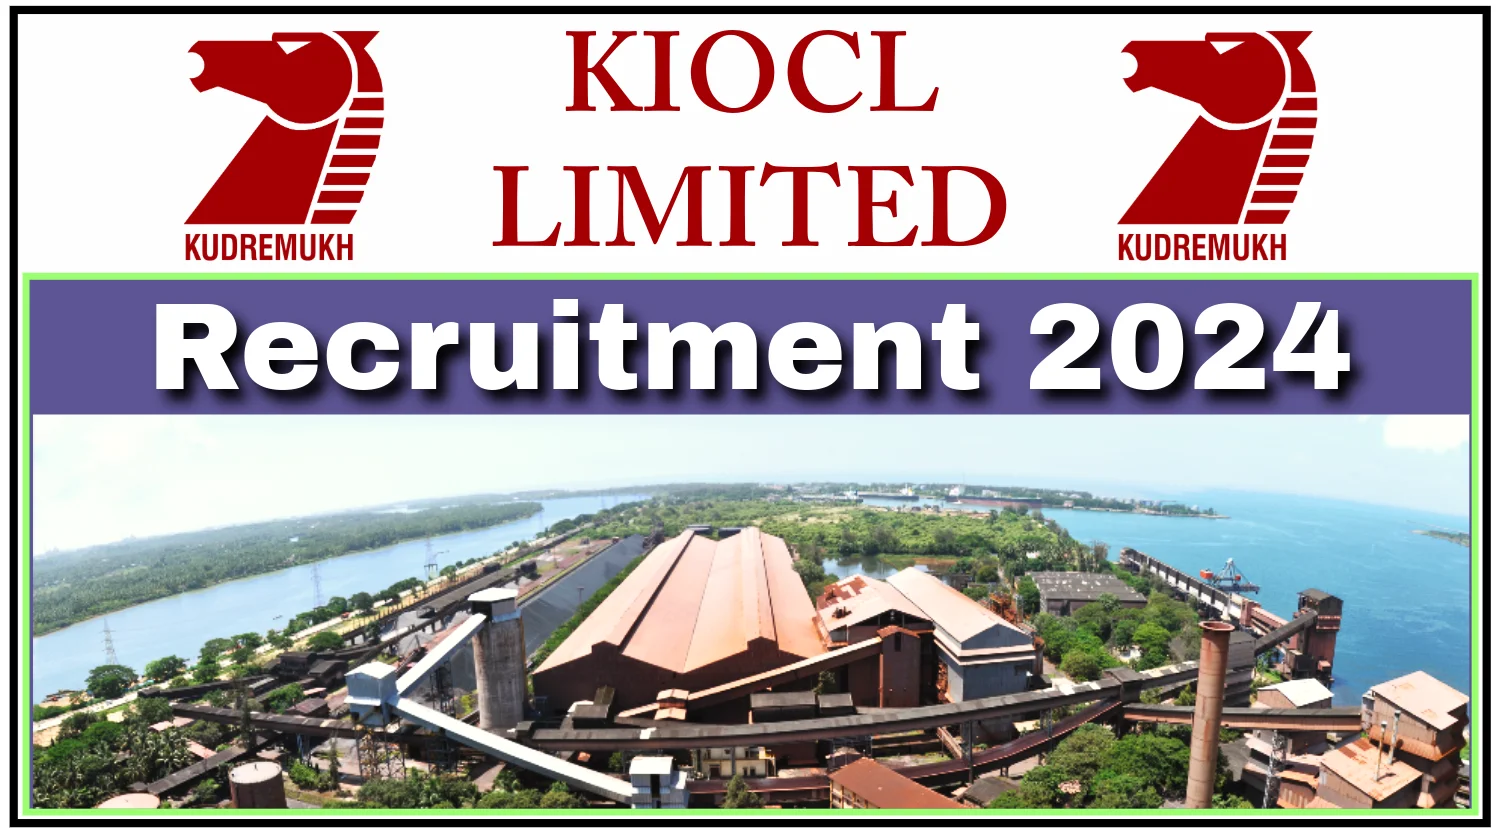 KIOCL Limited recruitment 